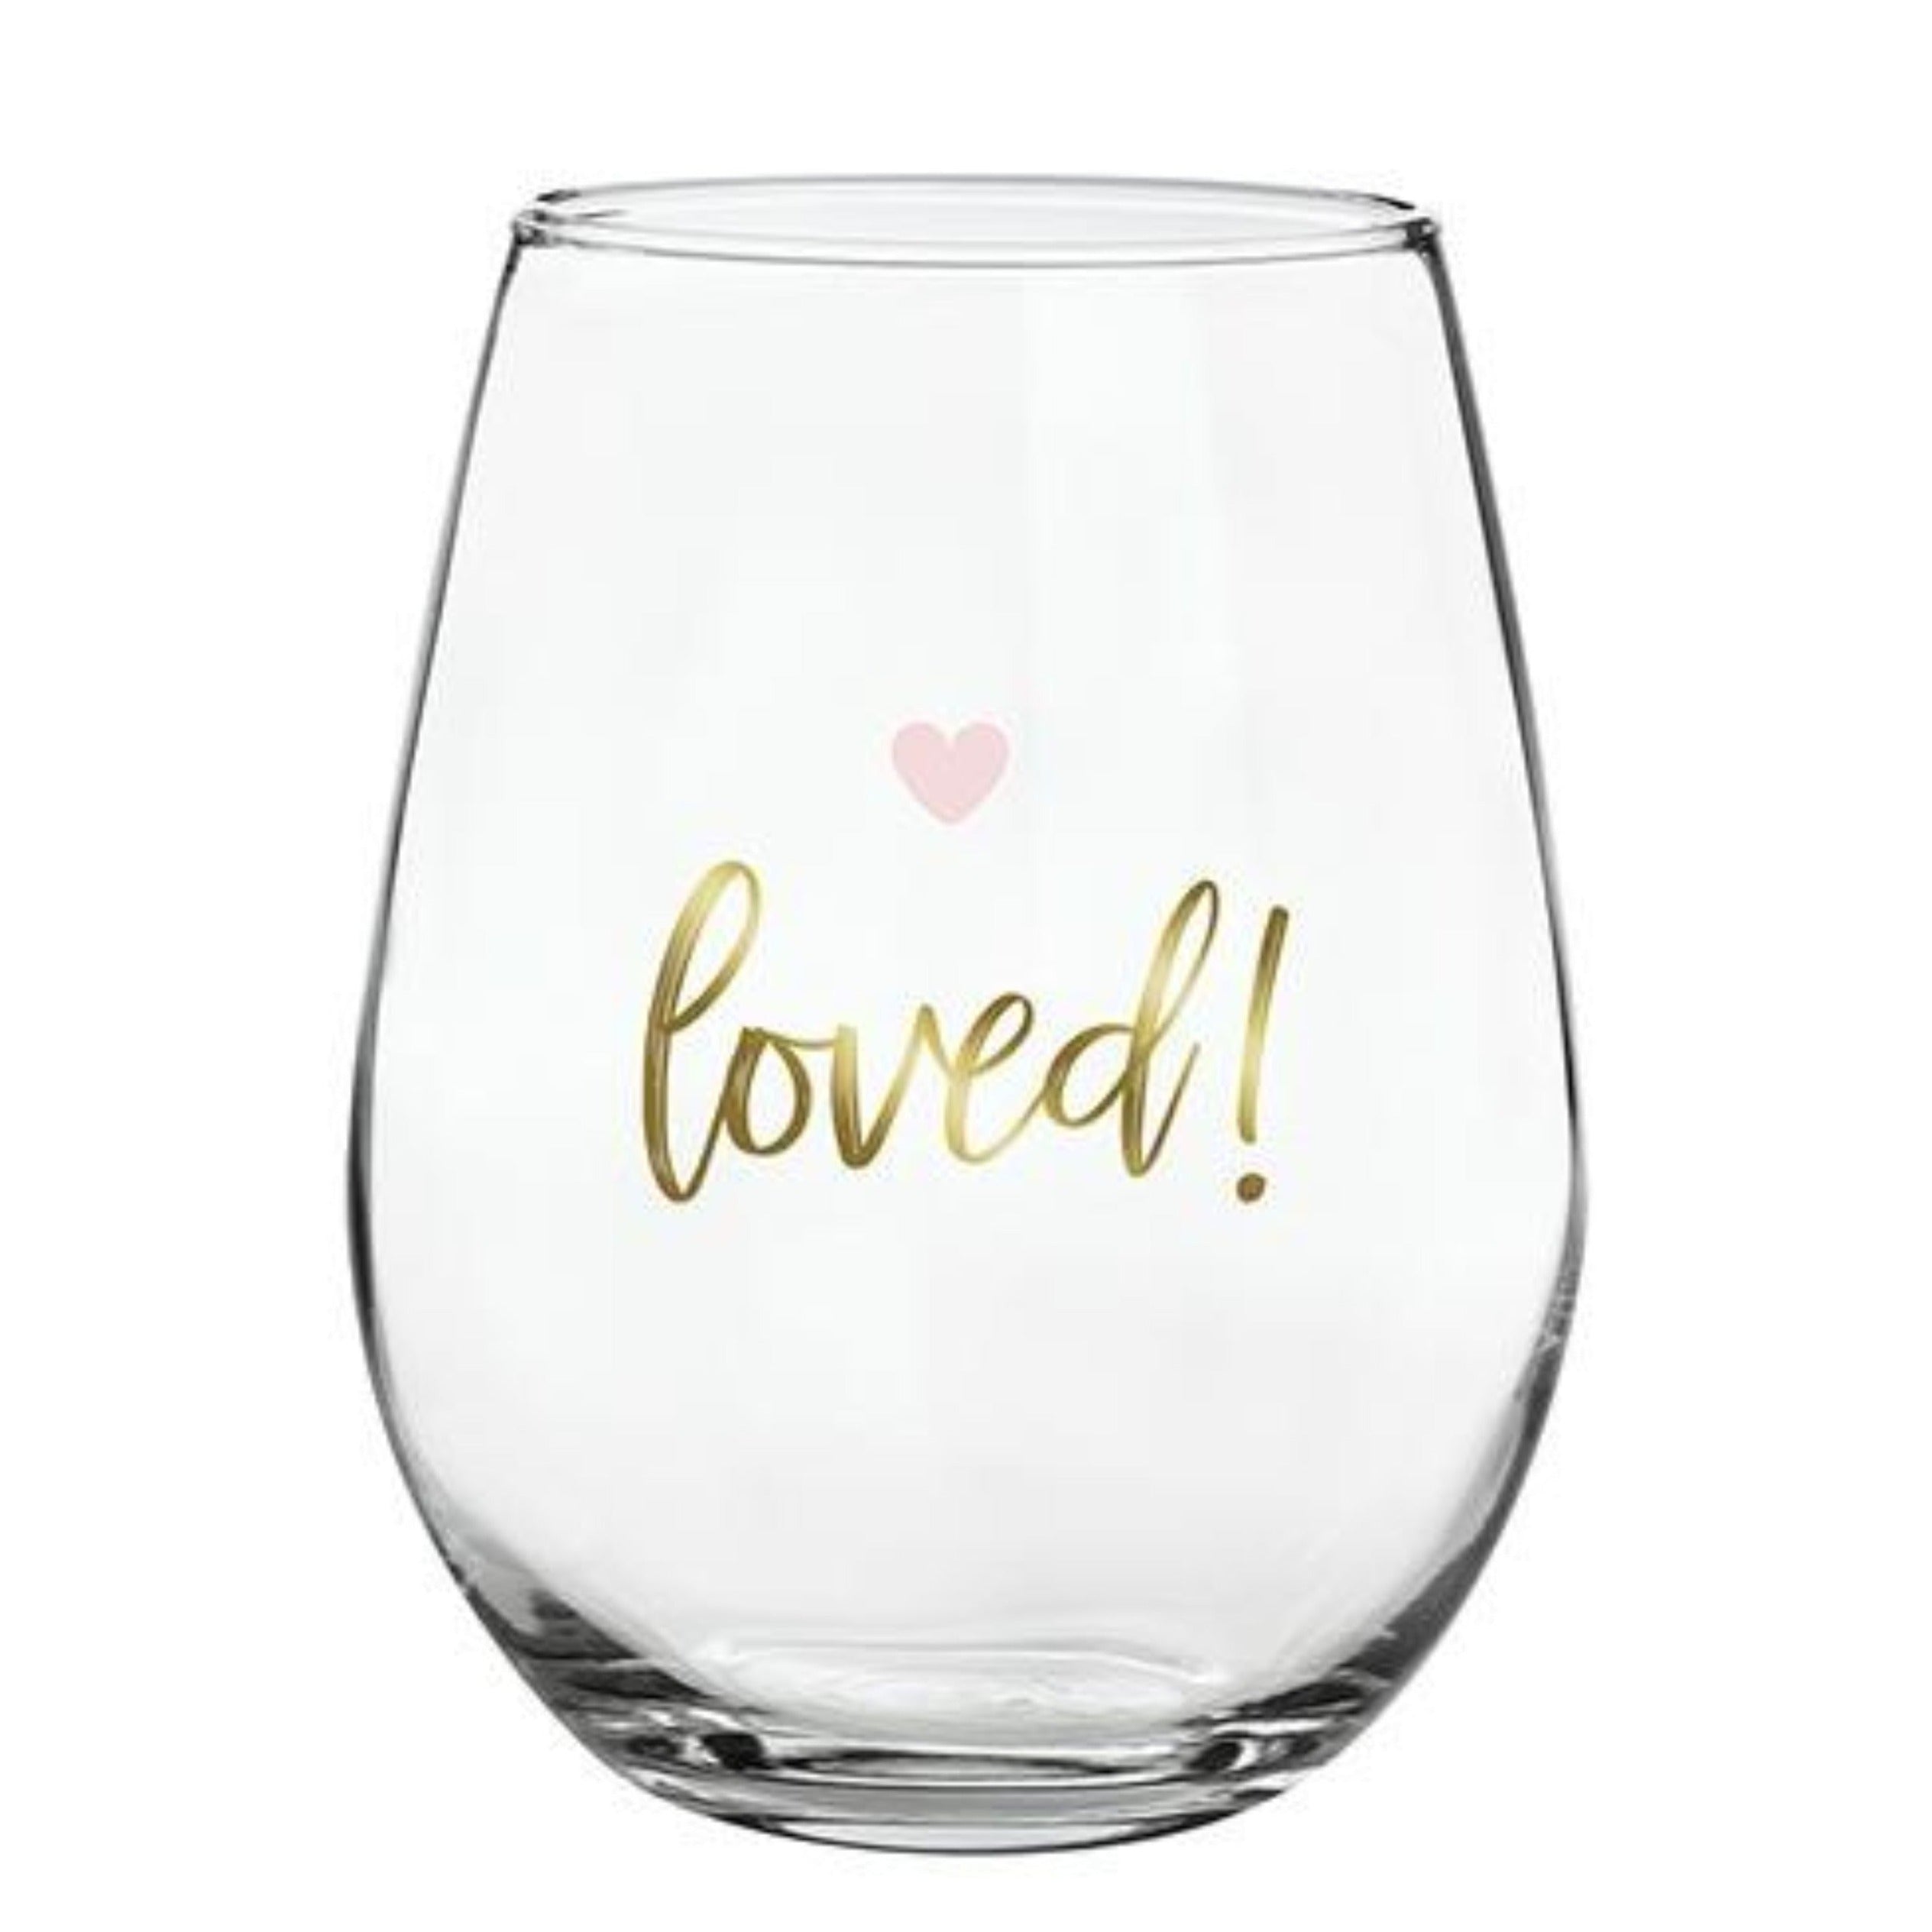 Loved! Wine Glass